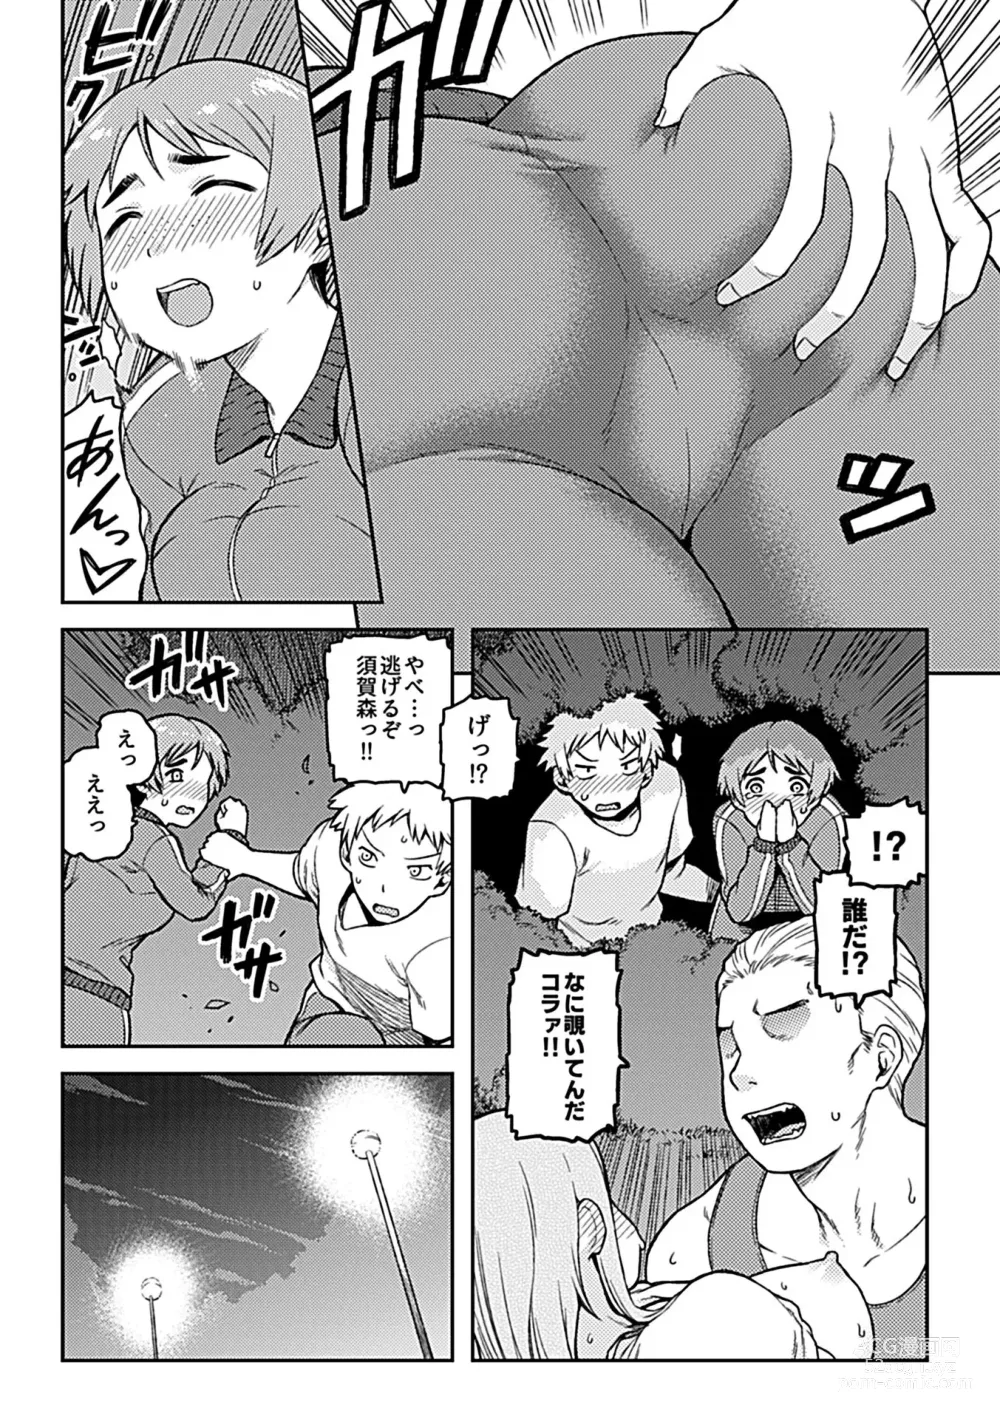 Page 13 of manga Aibiki